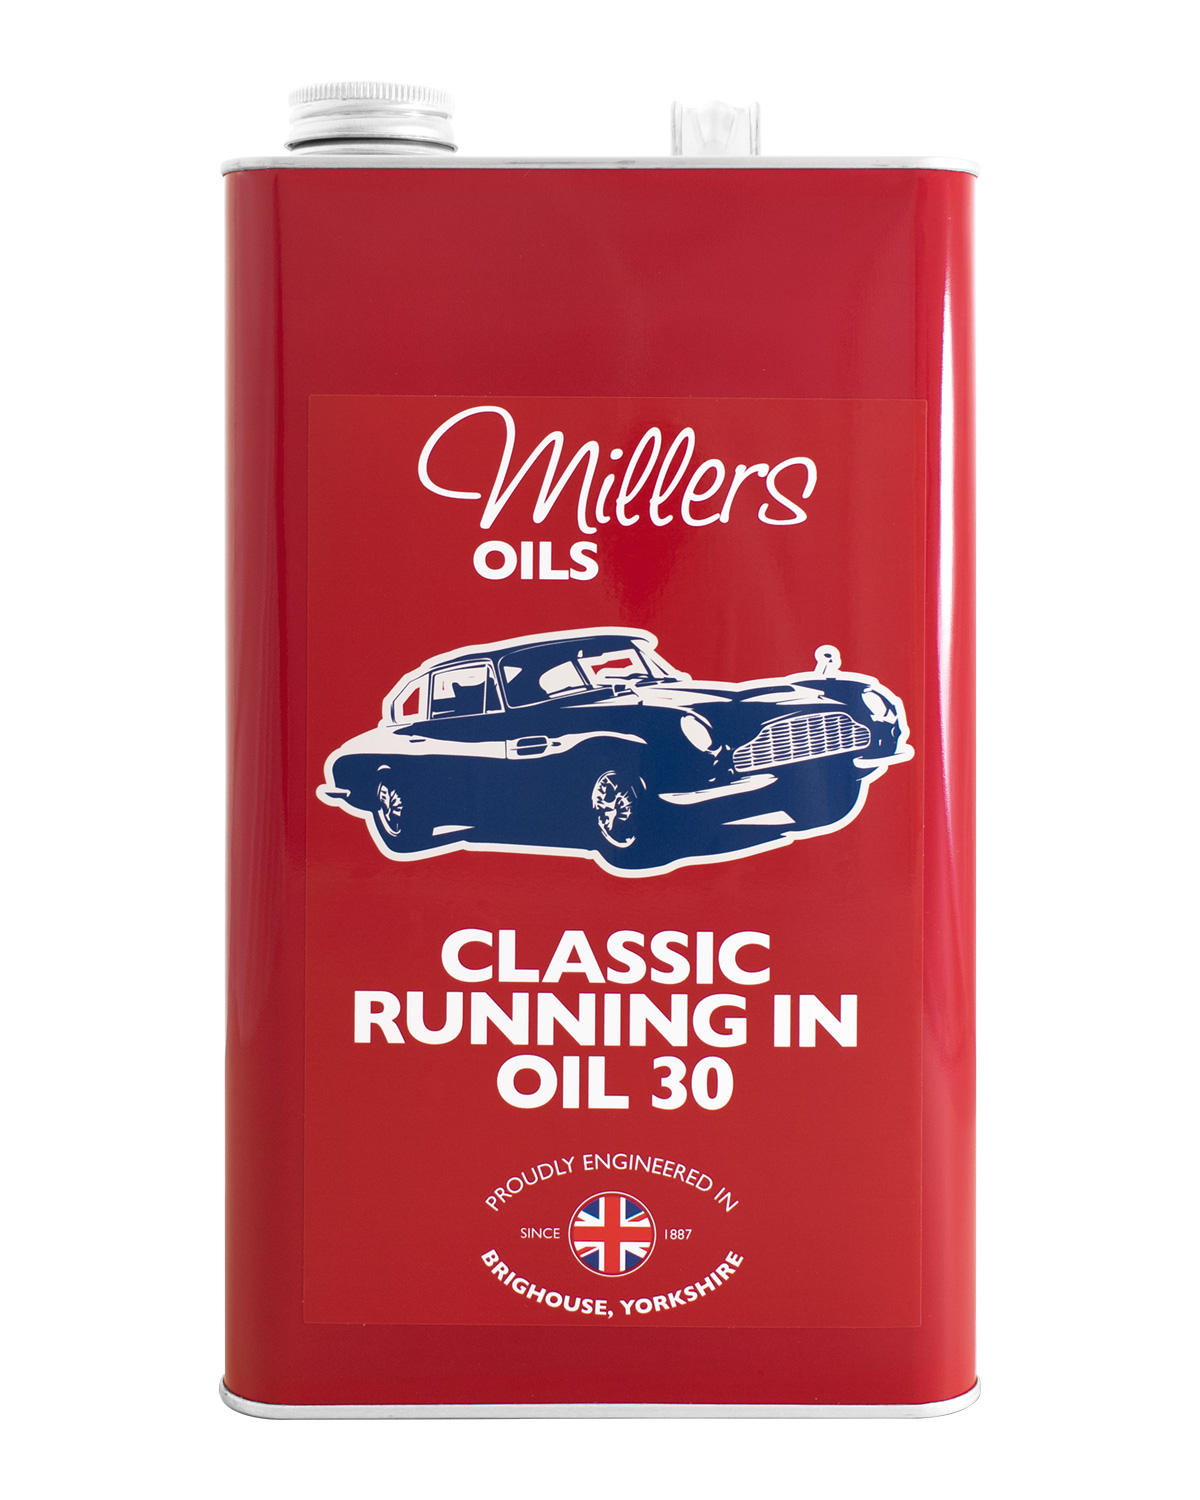 Millers Oils Classic Running in Oil 30, 5 Liter